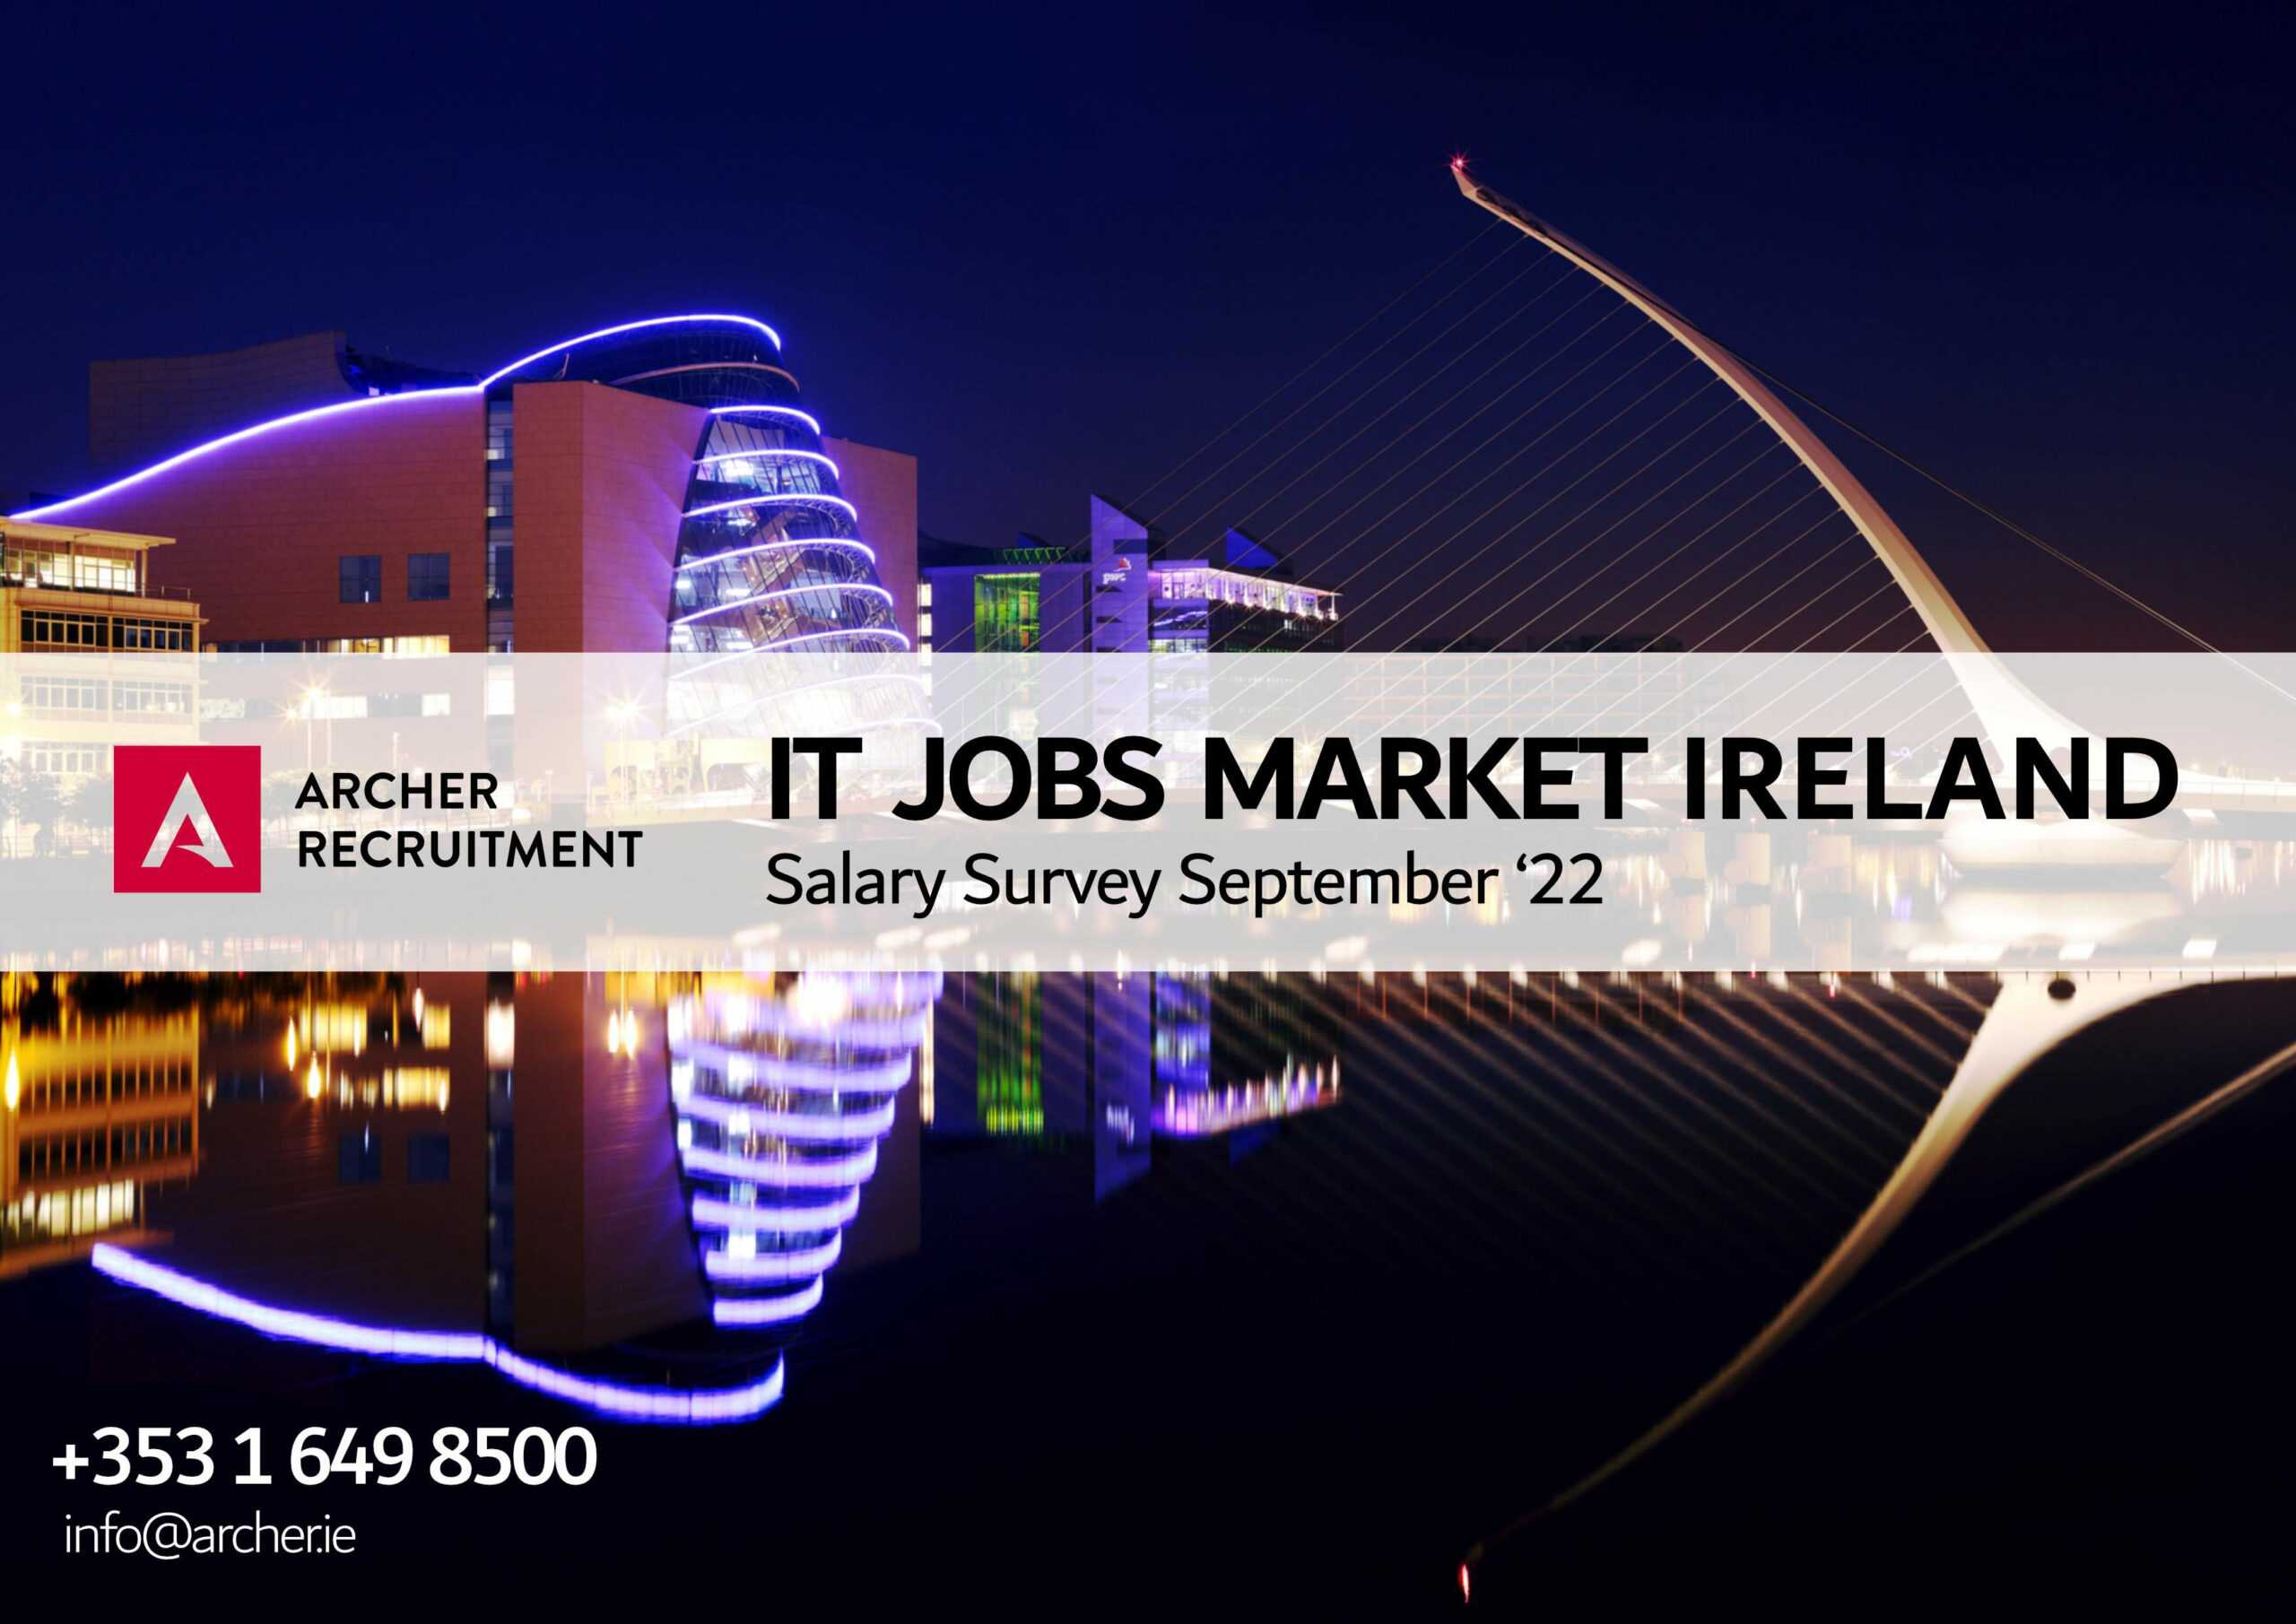 Archer Recruitment Ireland Salary Survey September 2022